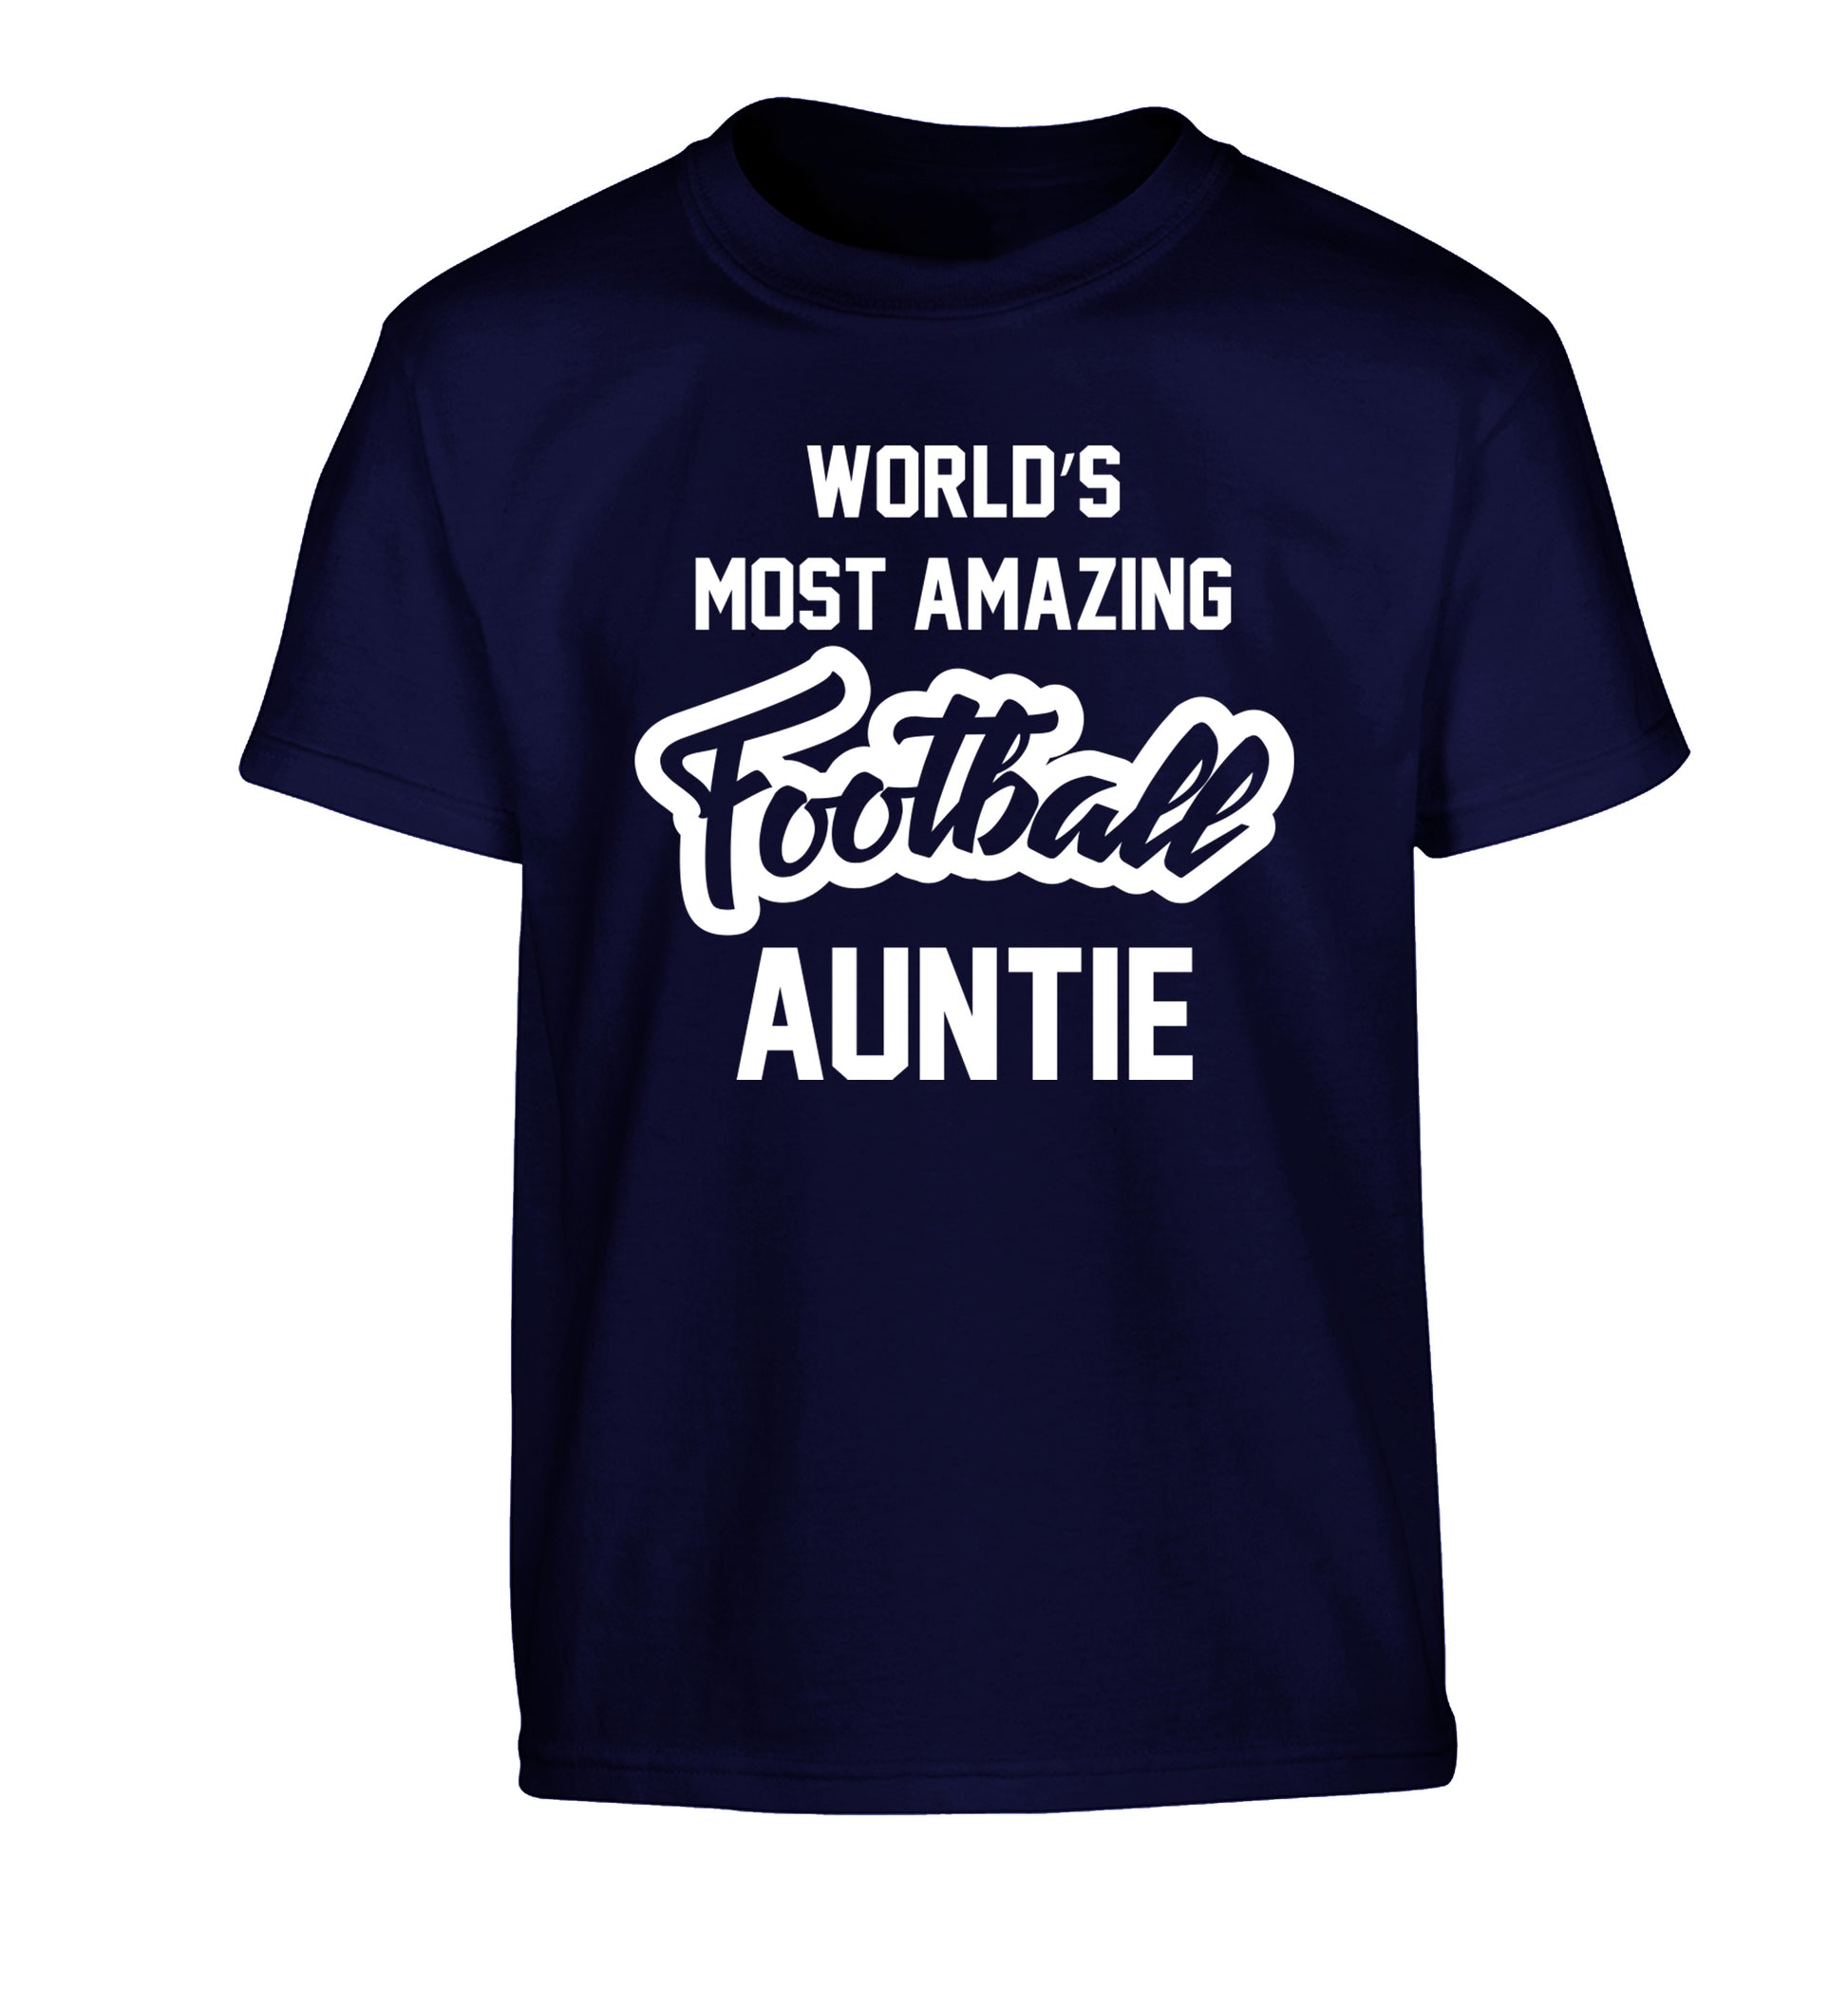 Worlds most amazing football auntie Children's navy Tshirt 12-14 Years